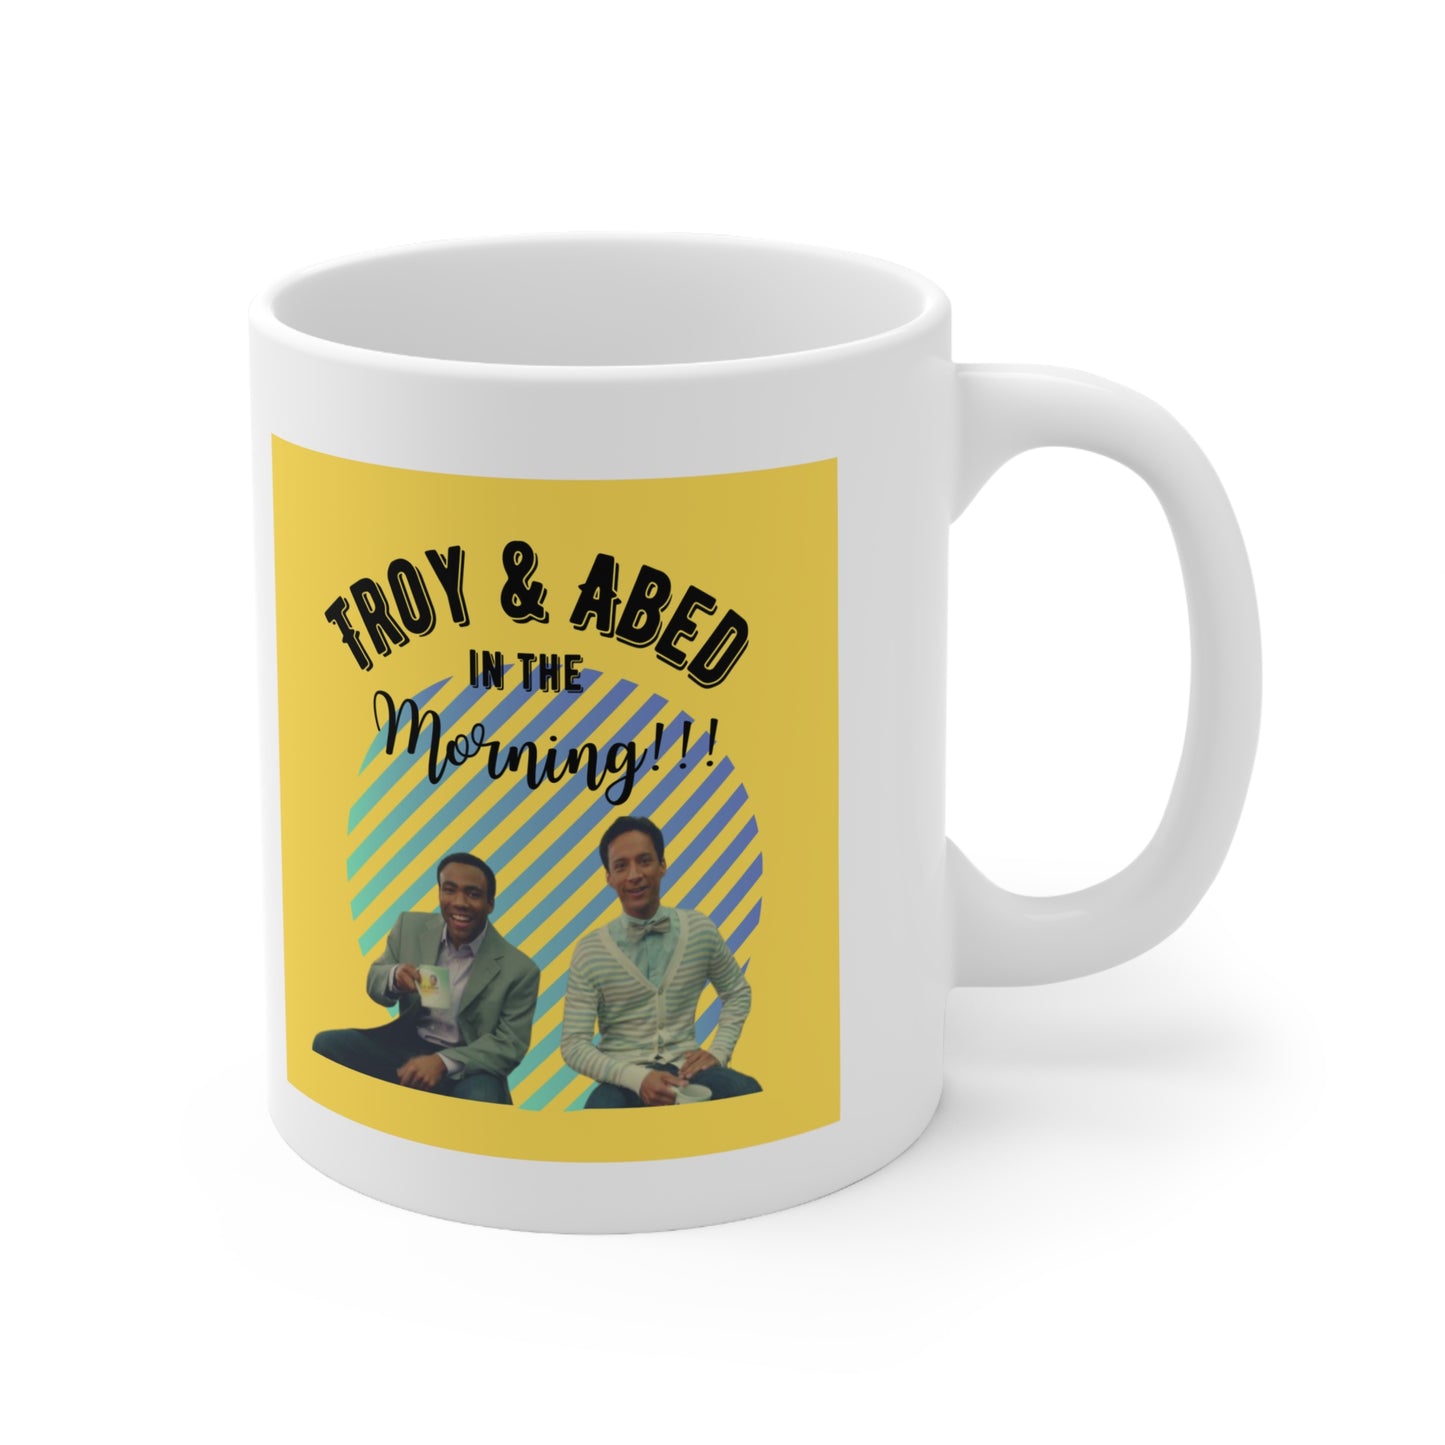 the "Community" show mug // Troy and Abed talk show mug // Fan of the Community gift mug